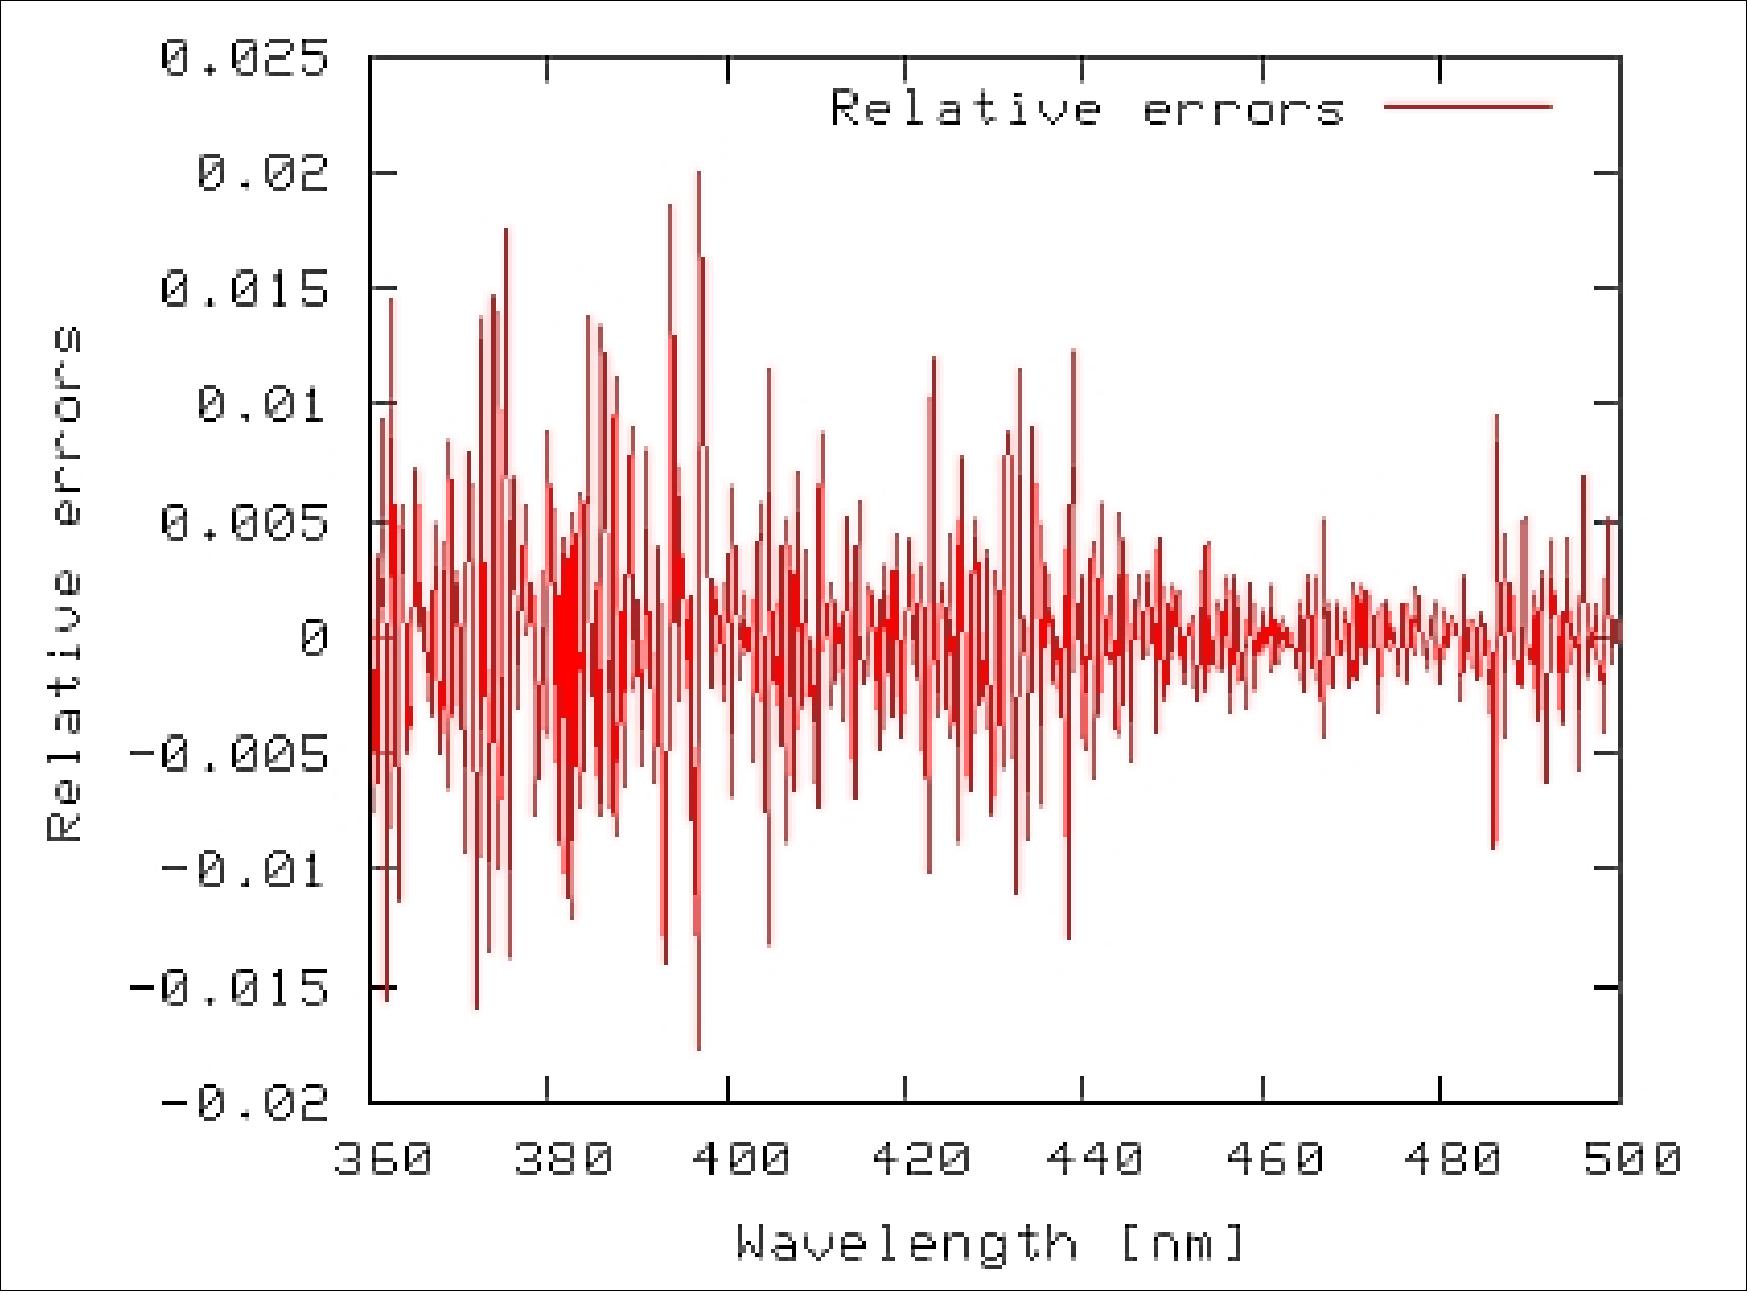 Figure 110: Heterogeneous scenes errors as a function of wavelength (image credit: SRON, TNO)